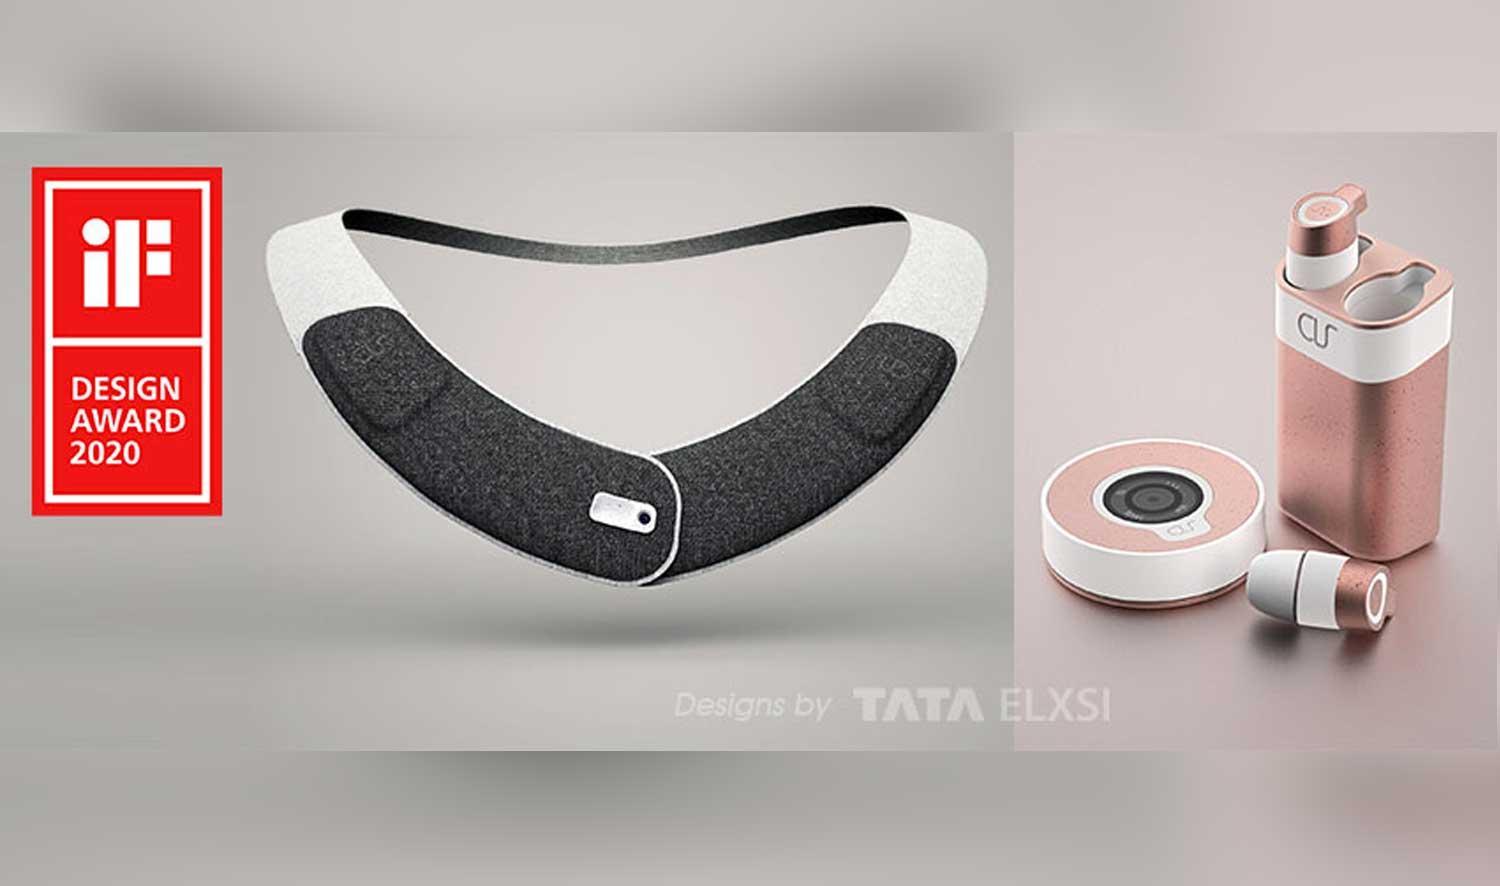 Tata Elxsi’s Smart Assistive Wearable Wins International iF Design Award